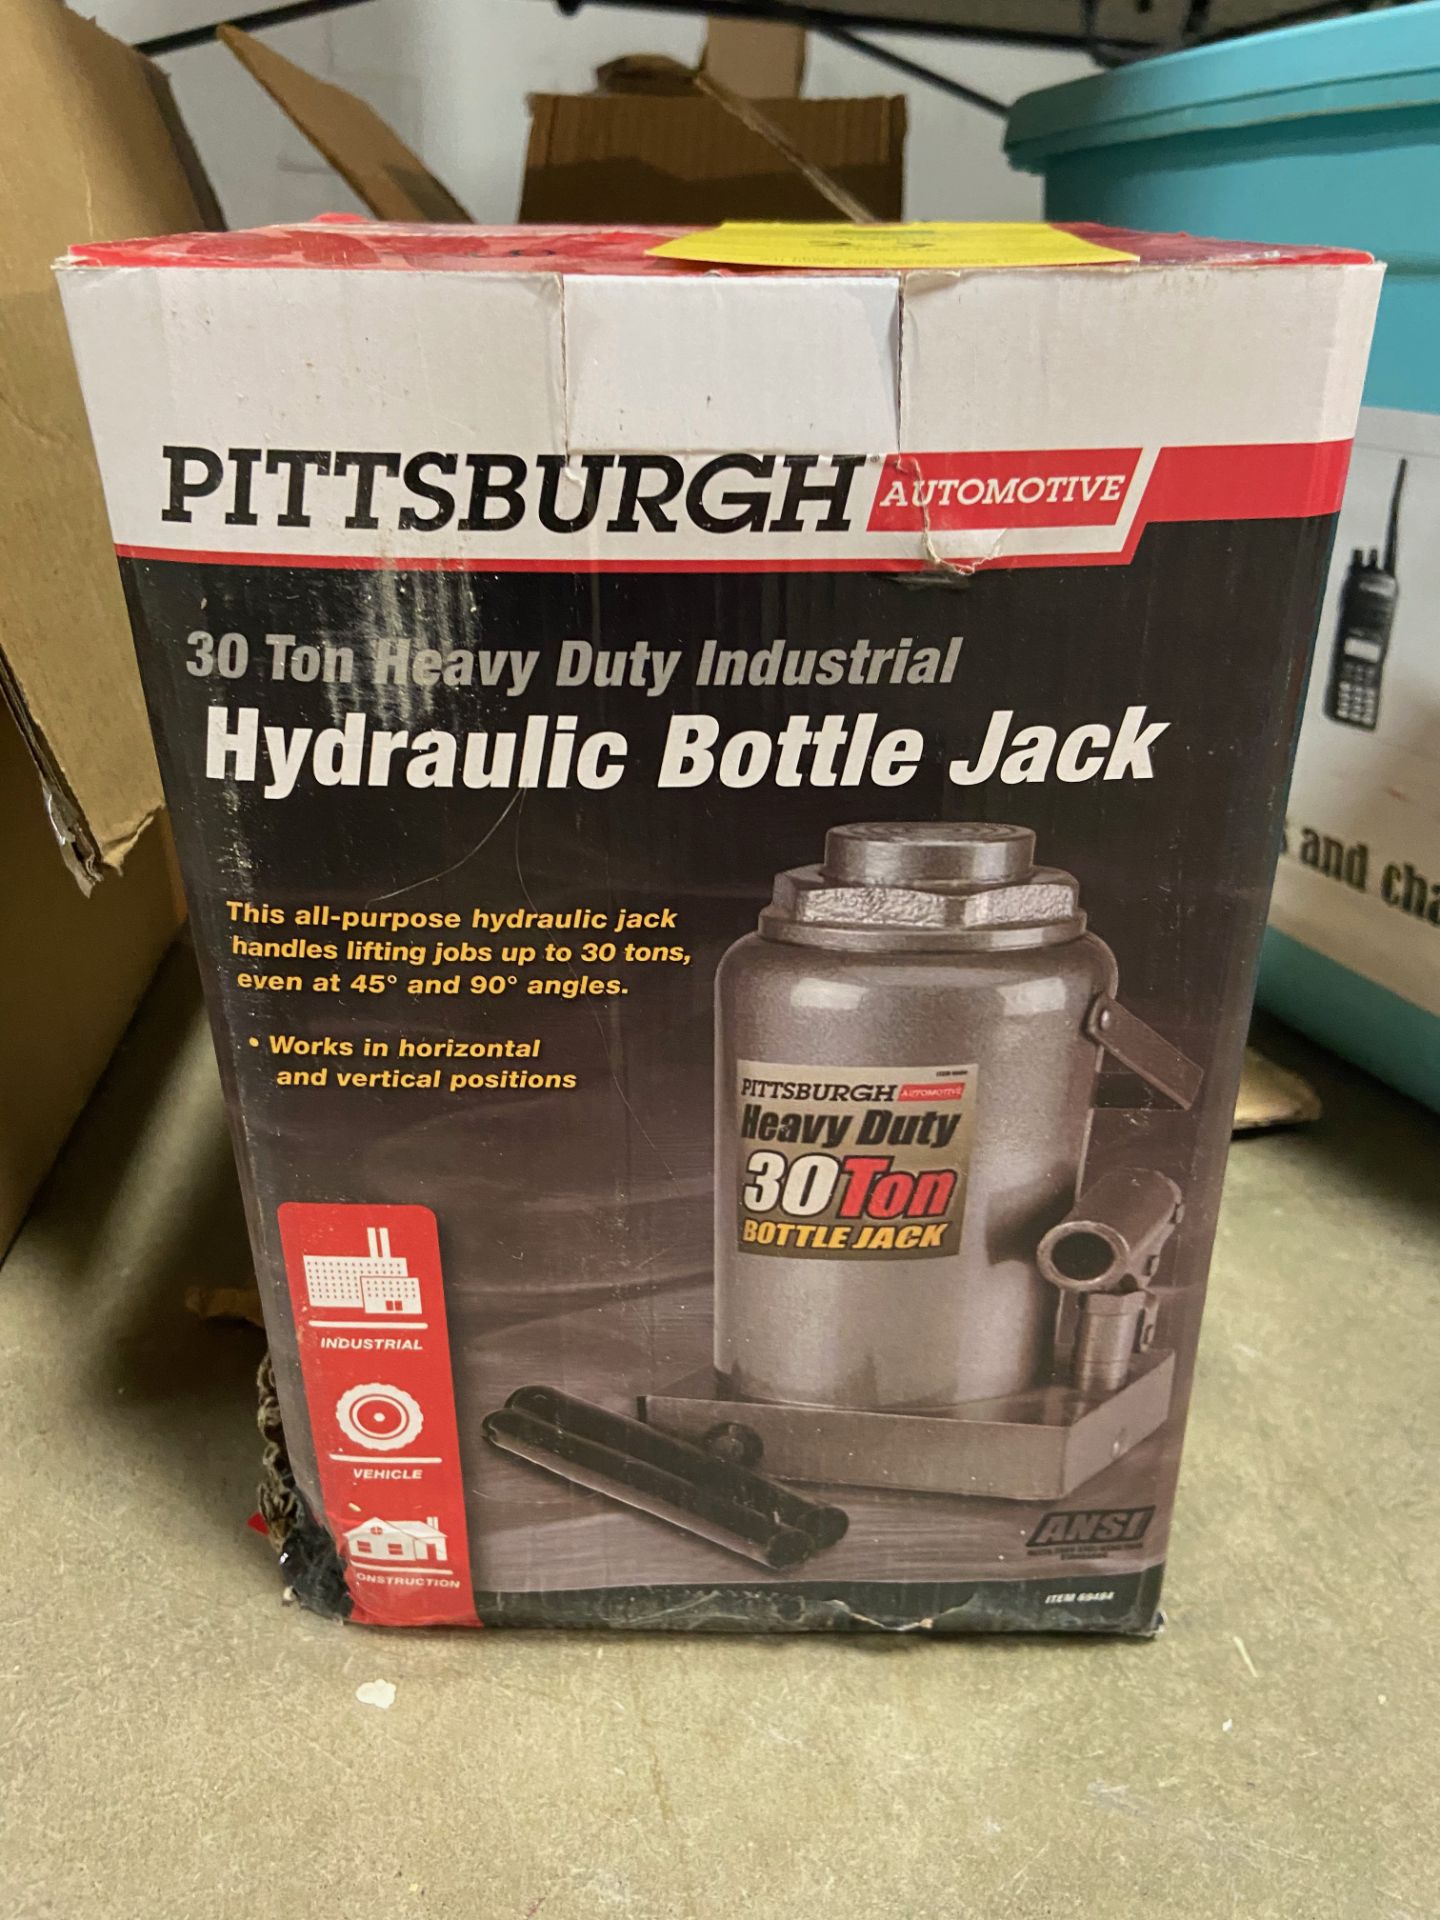 Pittsburgh Automotive Hydraulic Bottle Jack, 30 Ton, Rigging Fee: $10